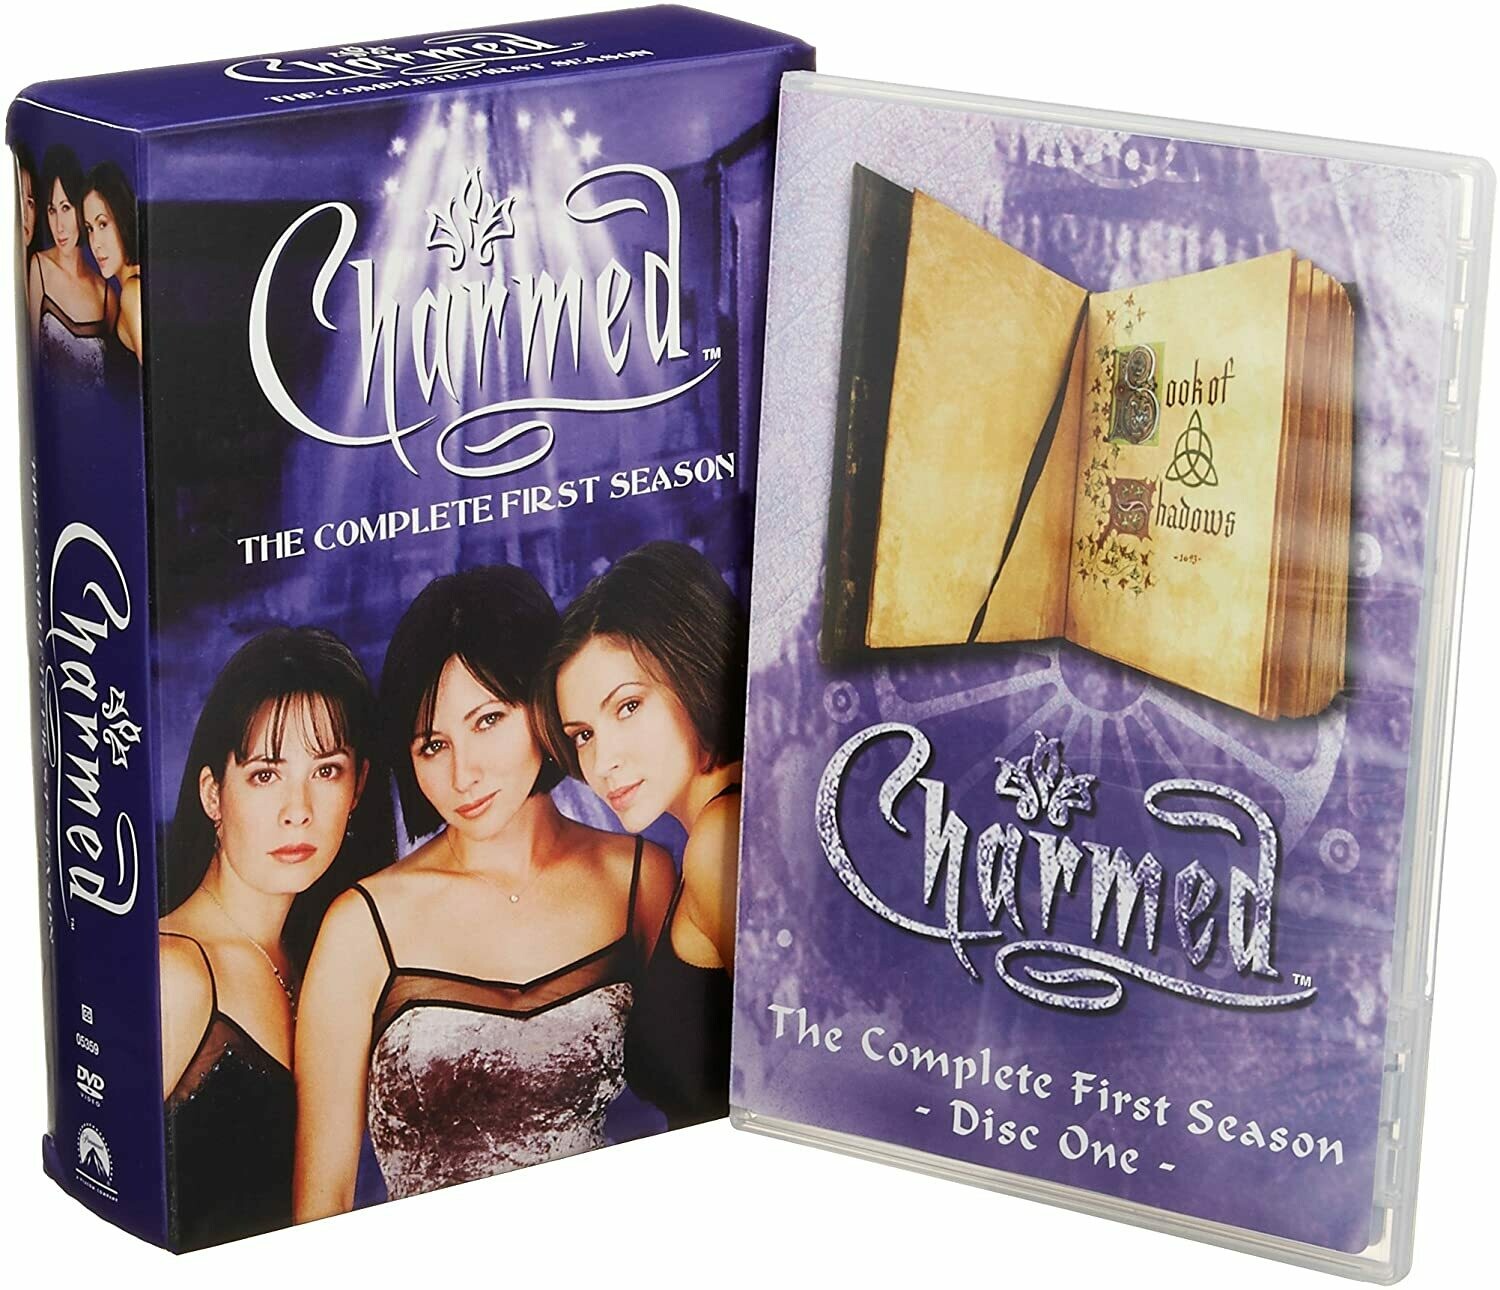 Charmed Season One (7 day rental)